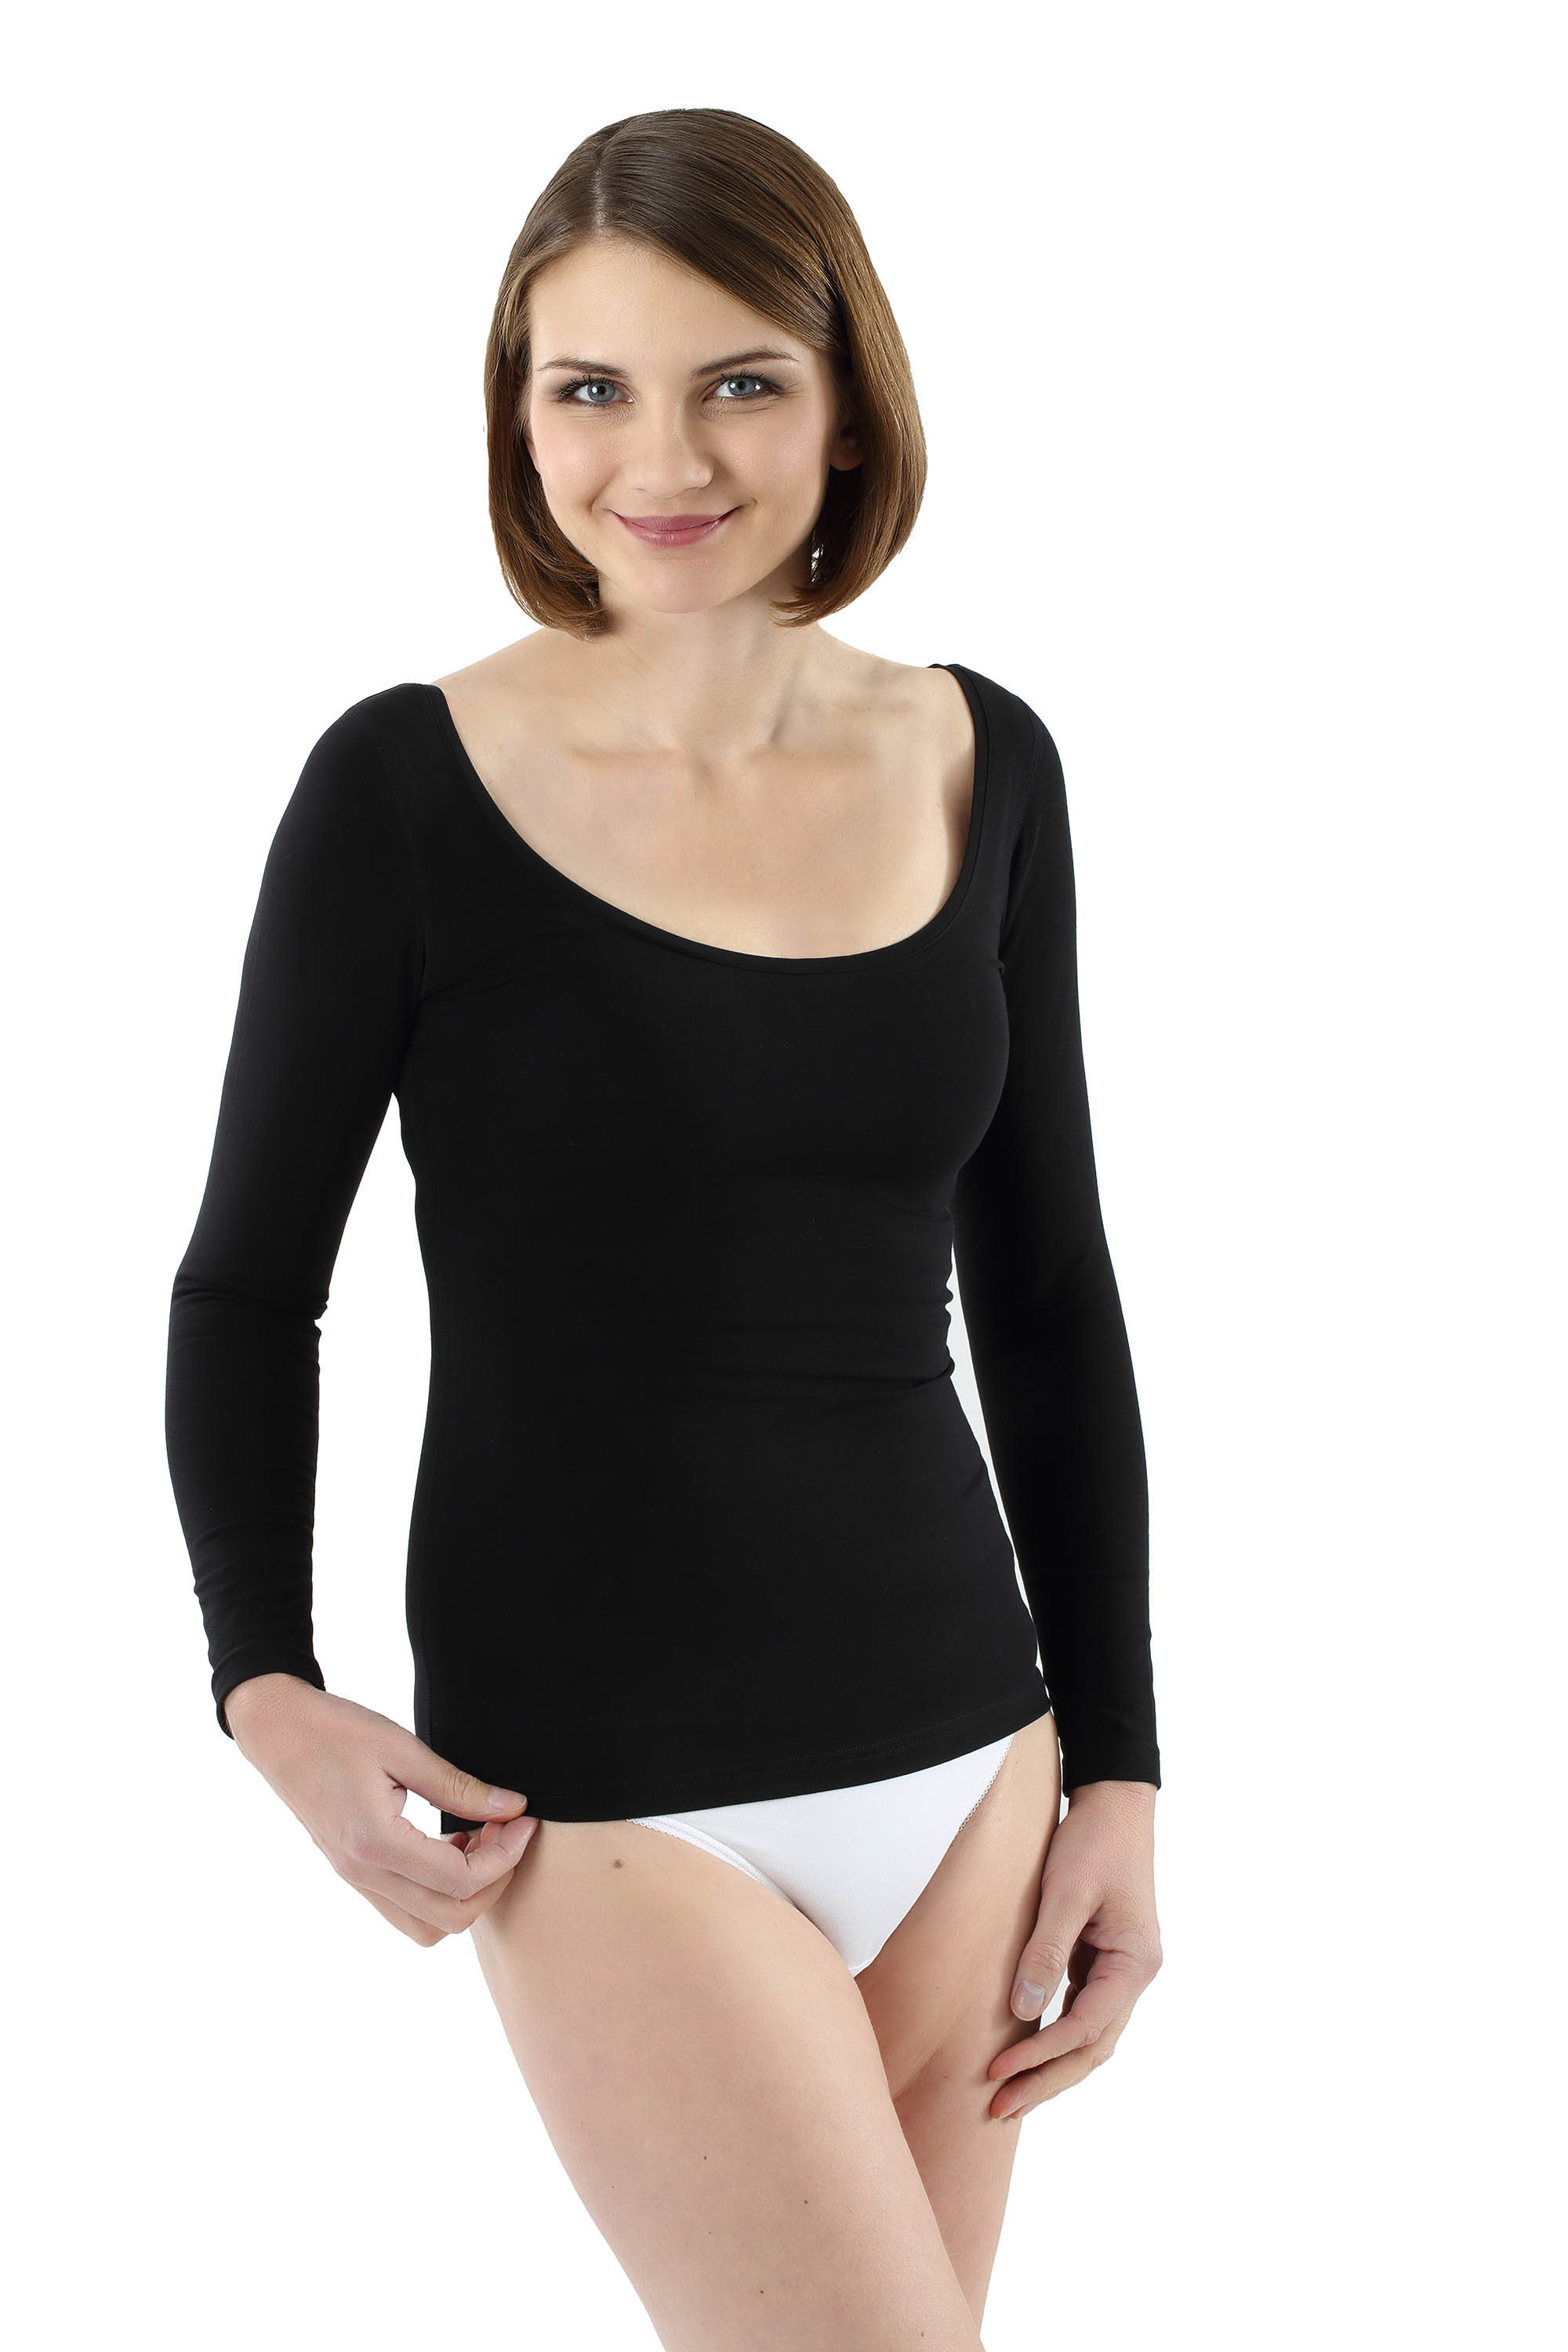 ALBERT KREUZ  Women's long sleeve undershirt with deep scoop neck stretch  cotton black